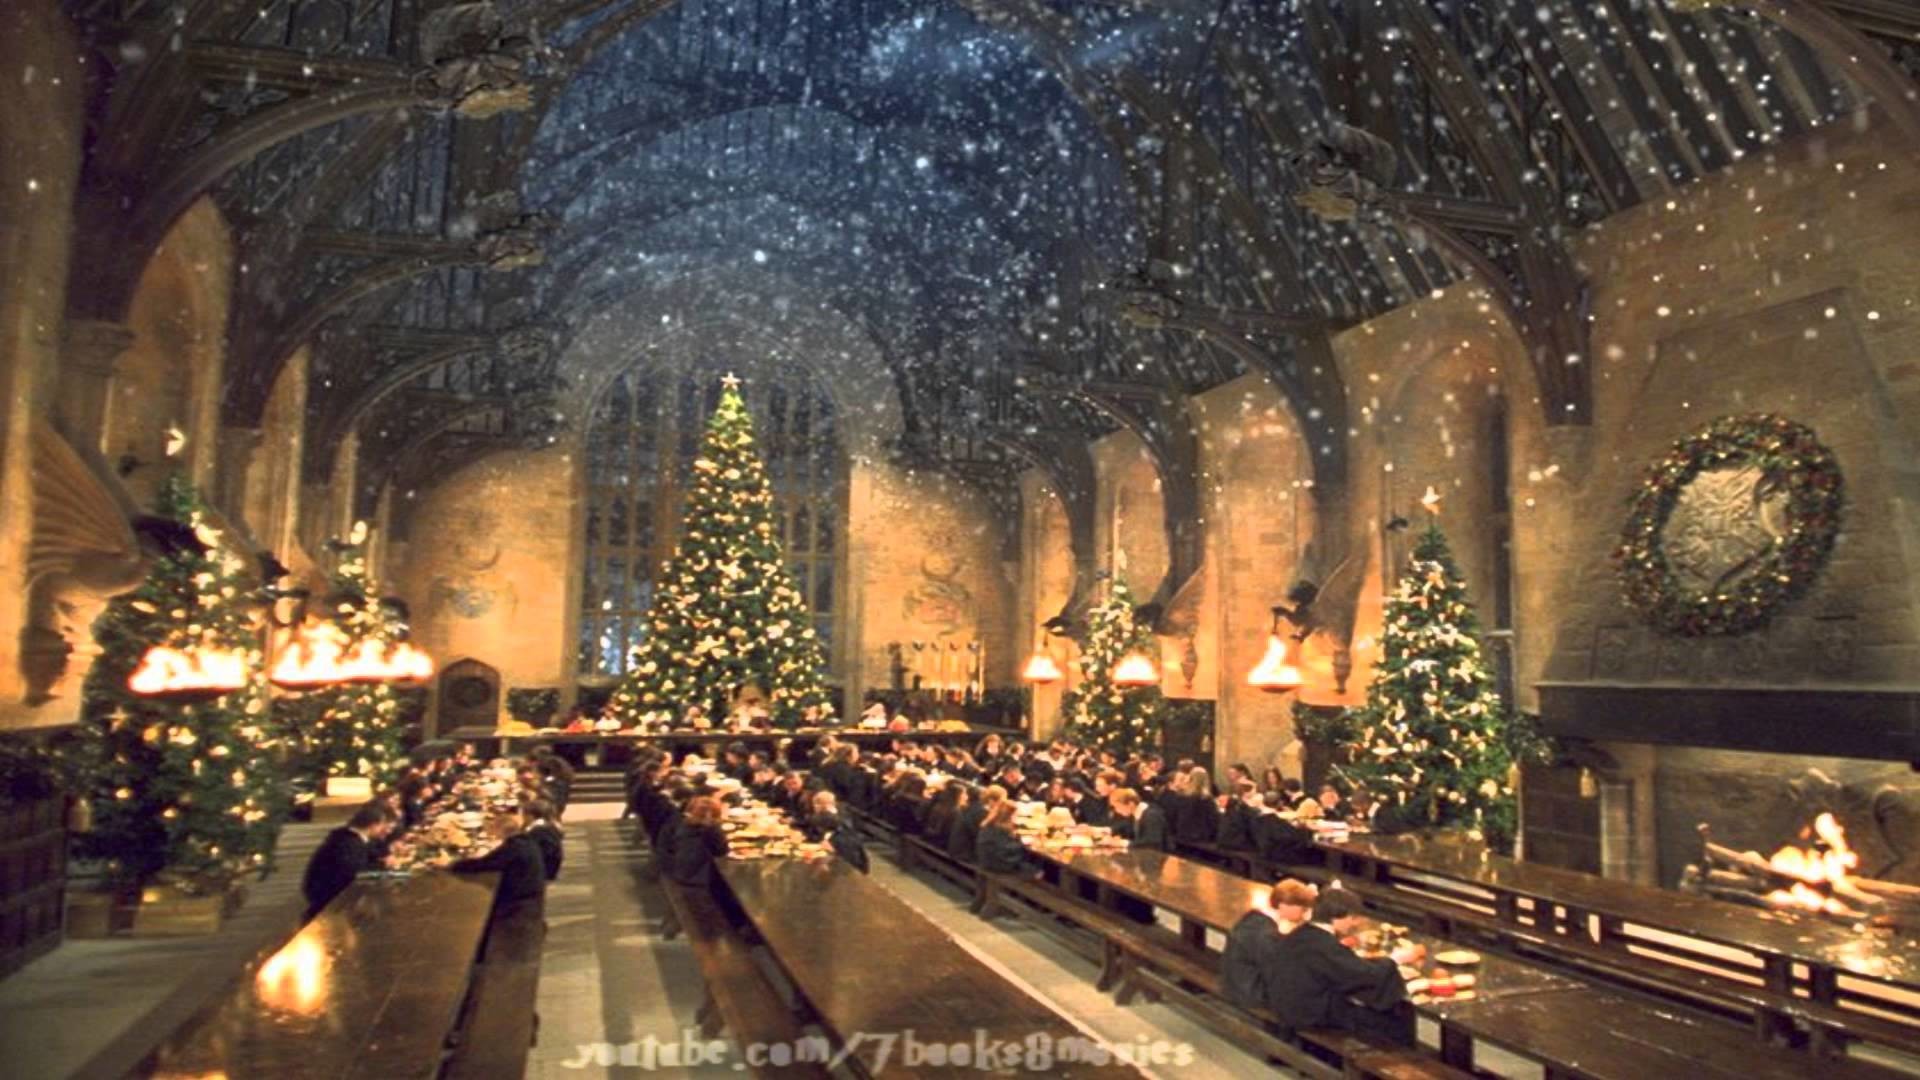 1920x1080 ... Desktop Fantastic Christmas Harry Potter Movies Widescreen Wallpapers  1920Ã1080 pixels We Try to Present Christmas